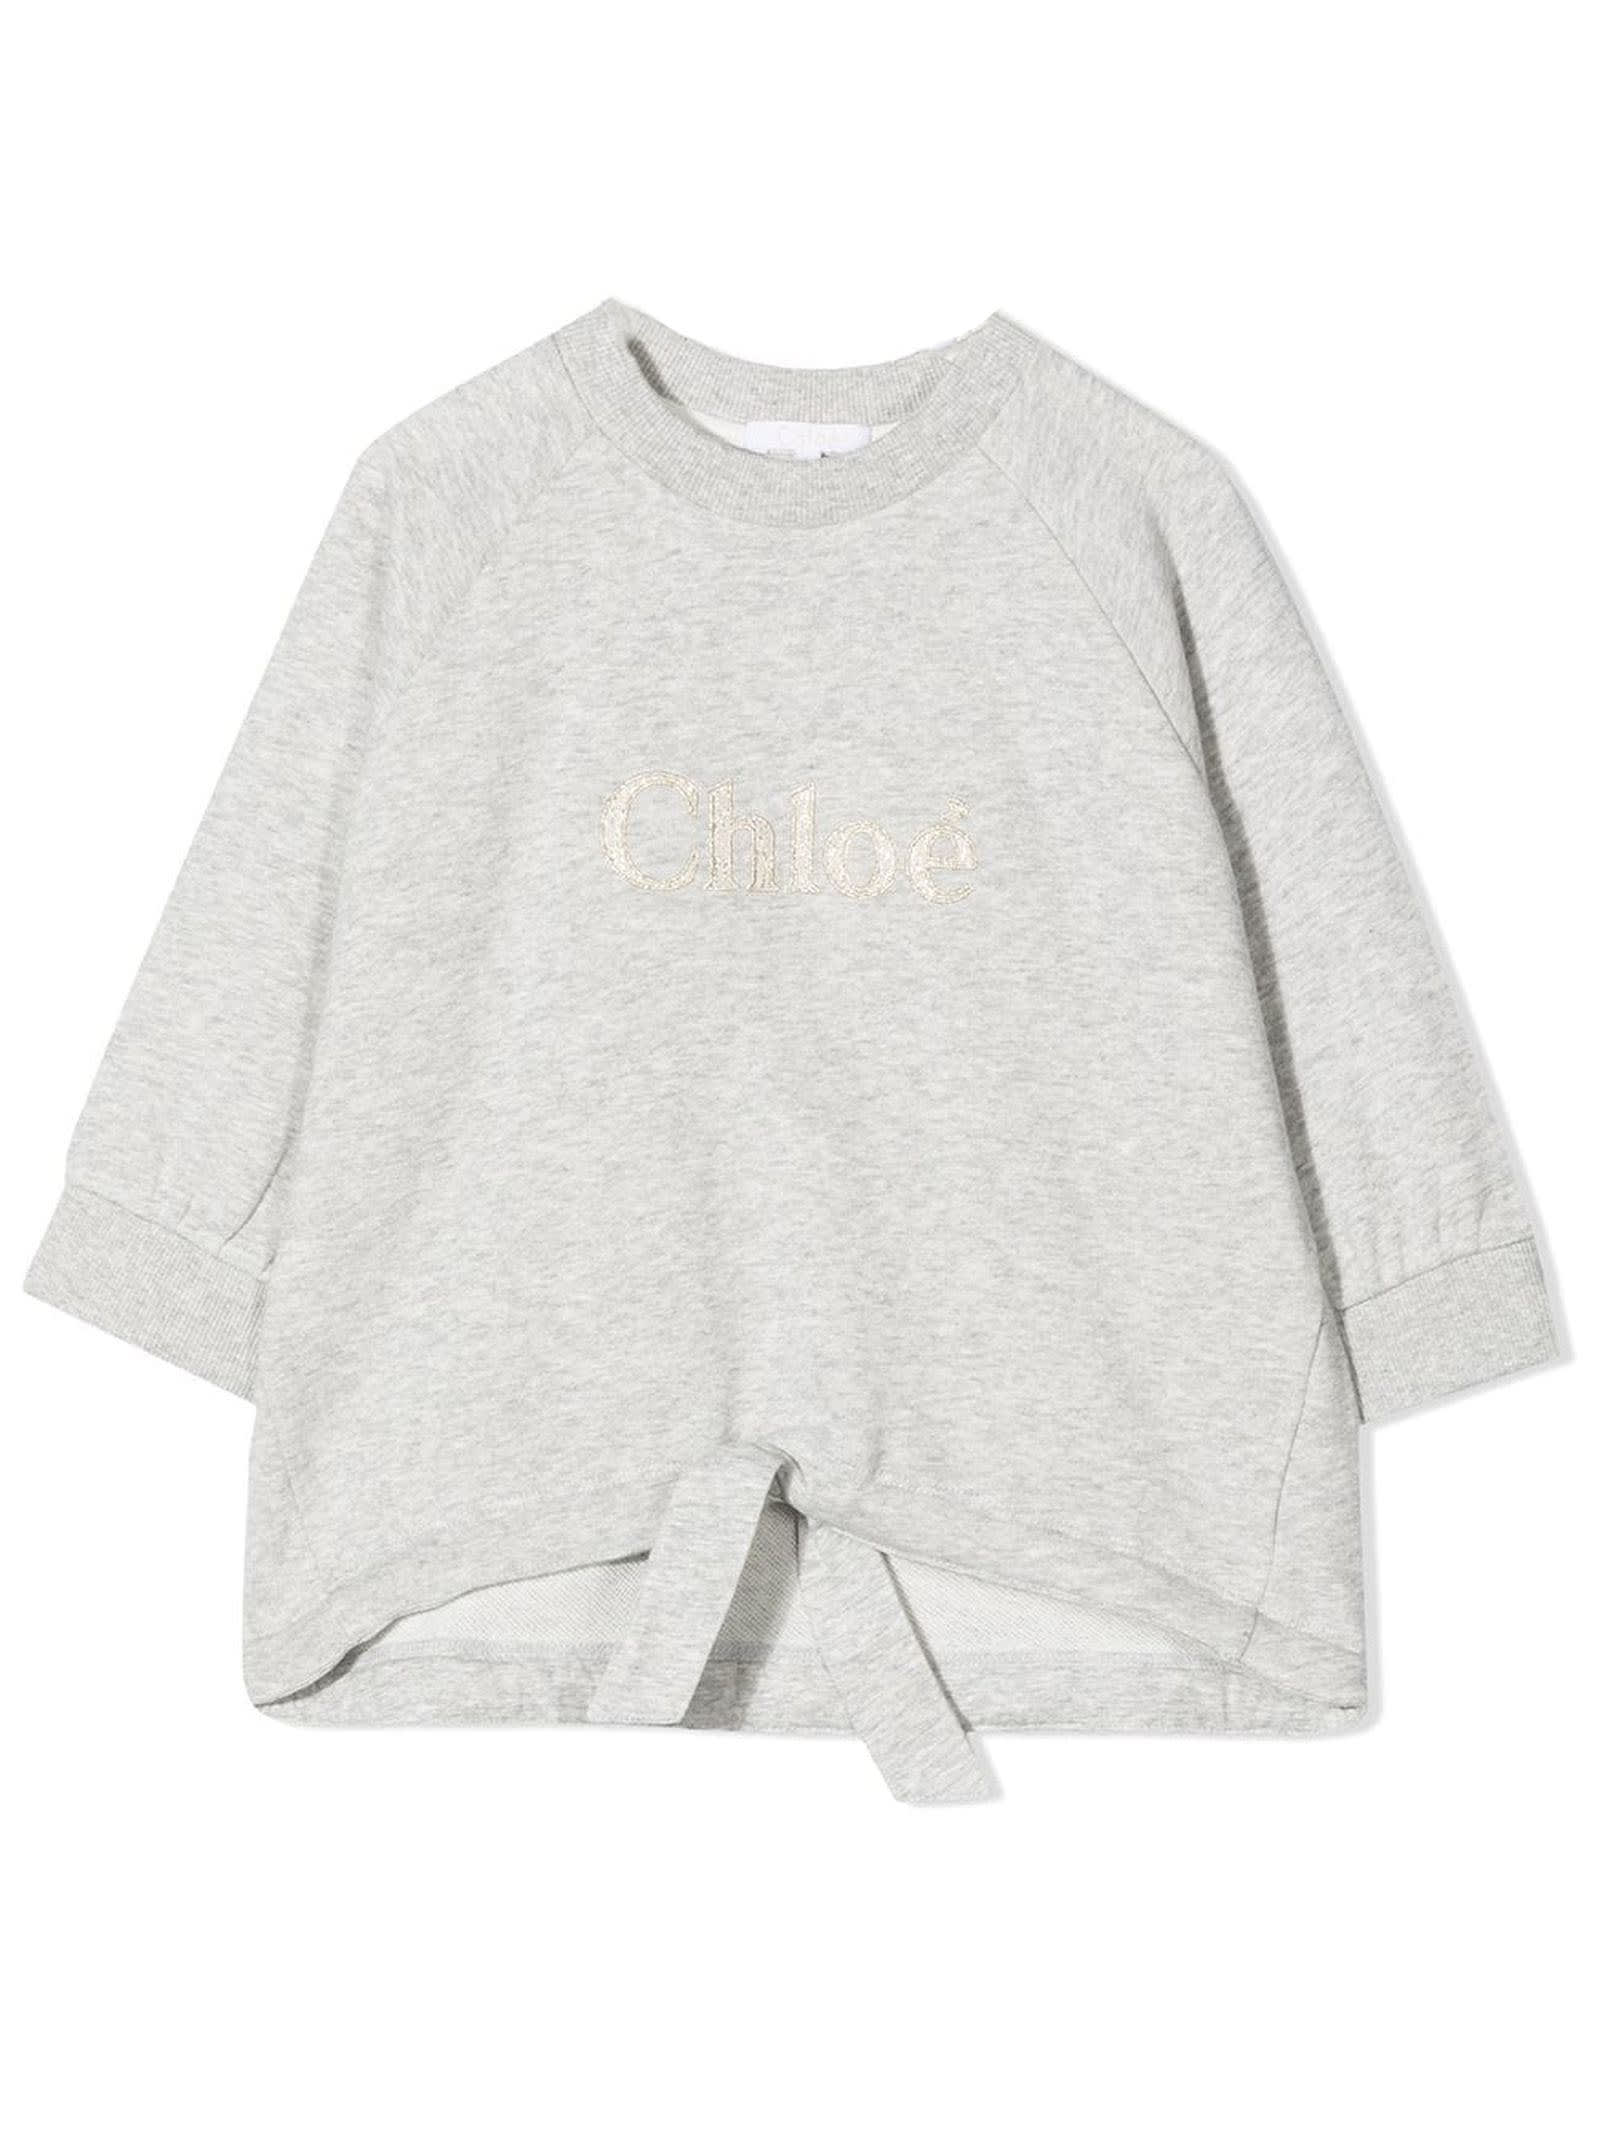 Chloé Grey Cotton Blend Sweatshirt